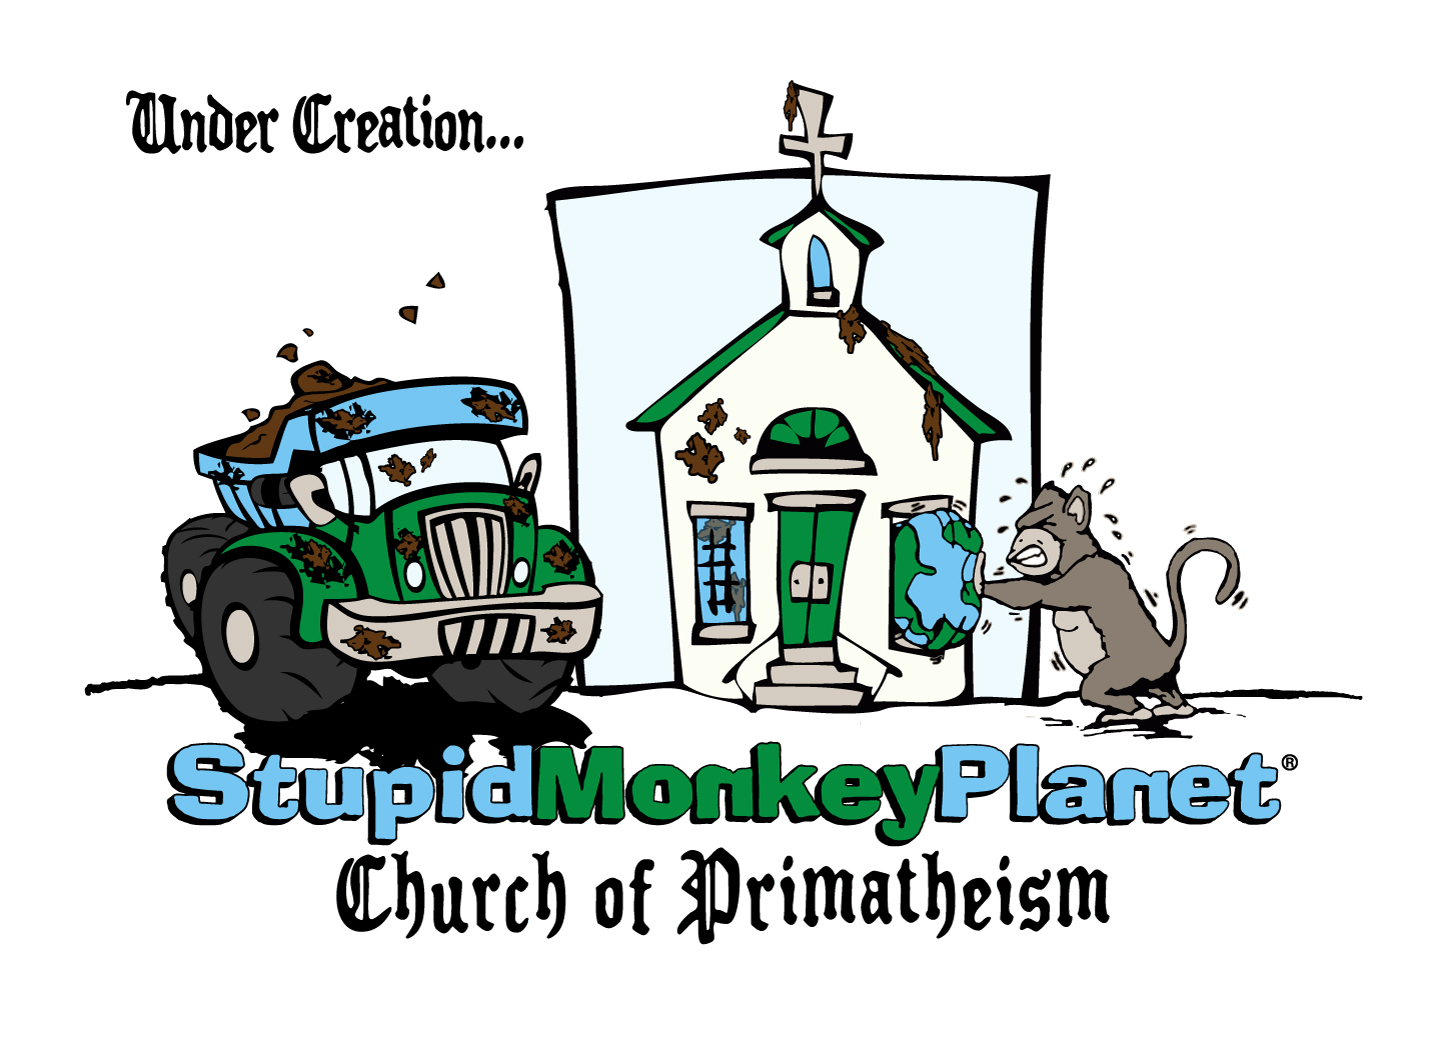 Church of Primatheism